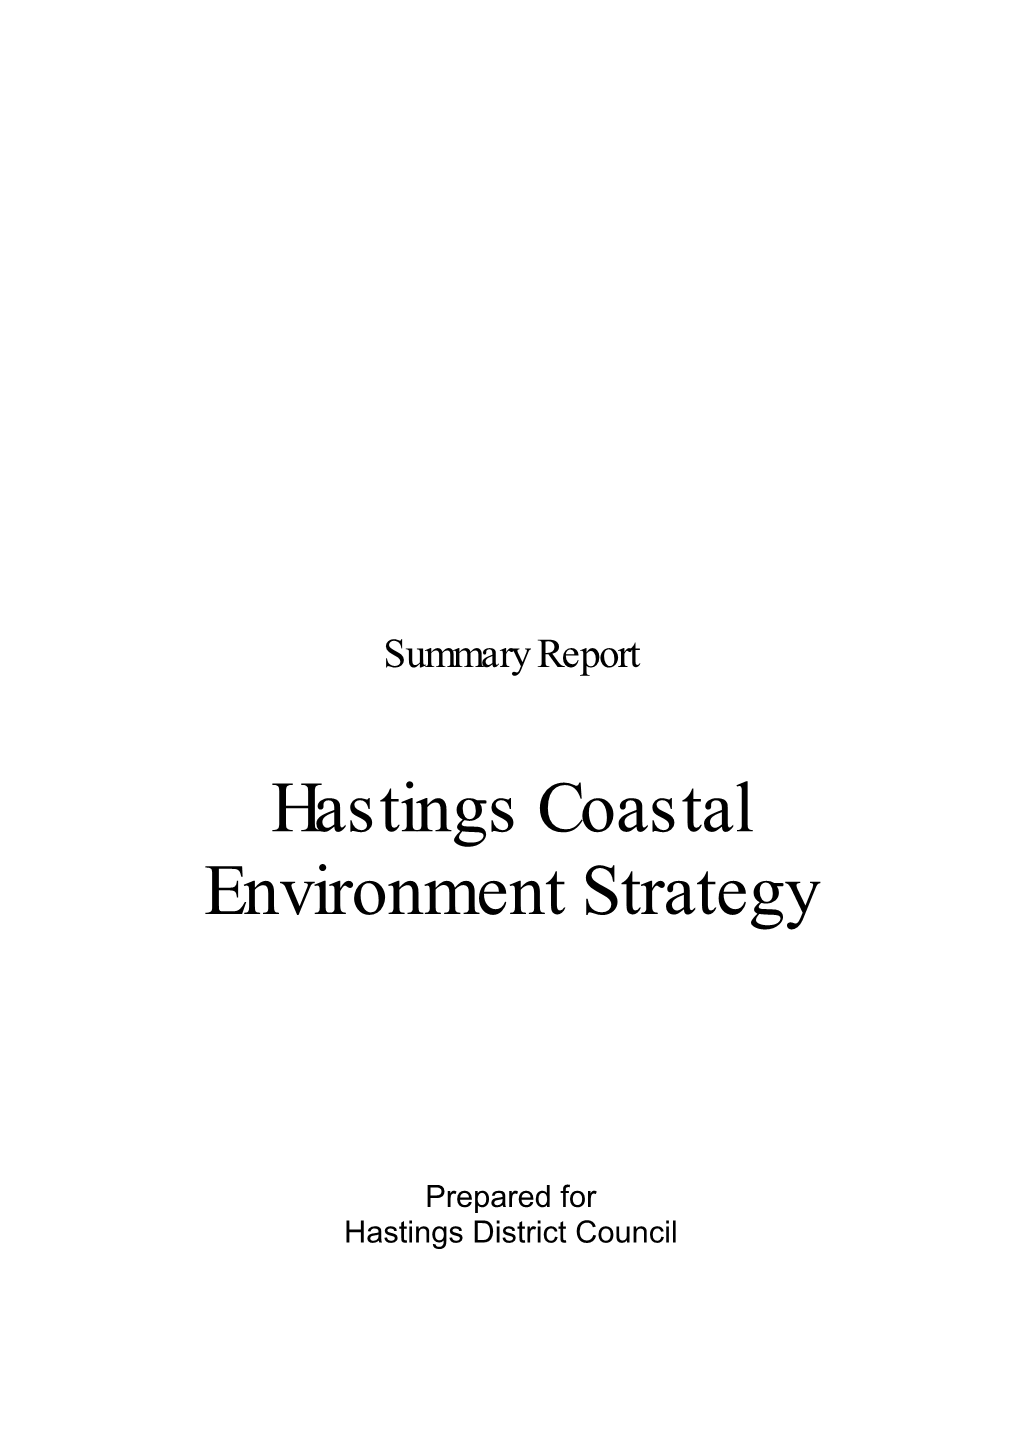 Hastings Coastal Environment Strategy